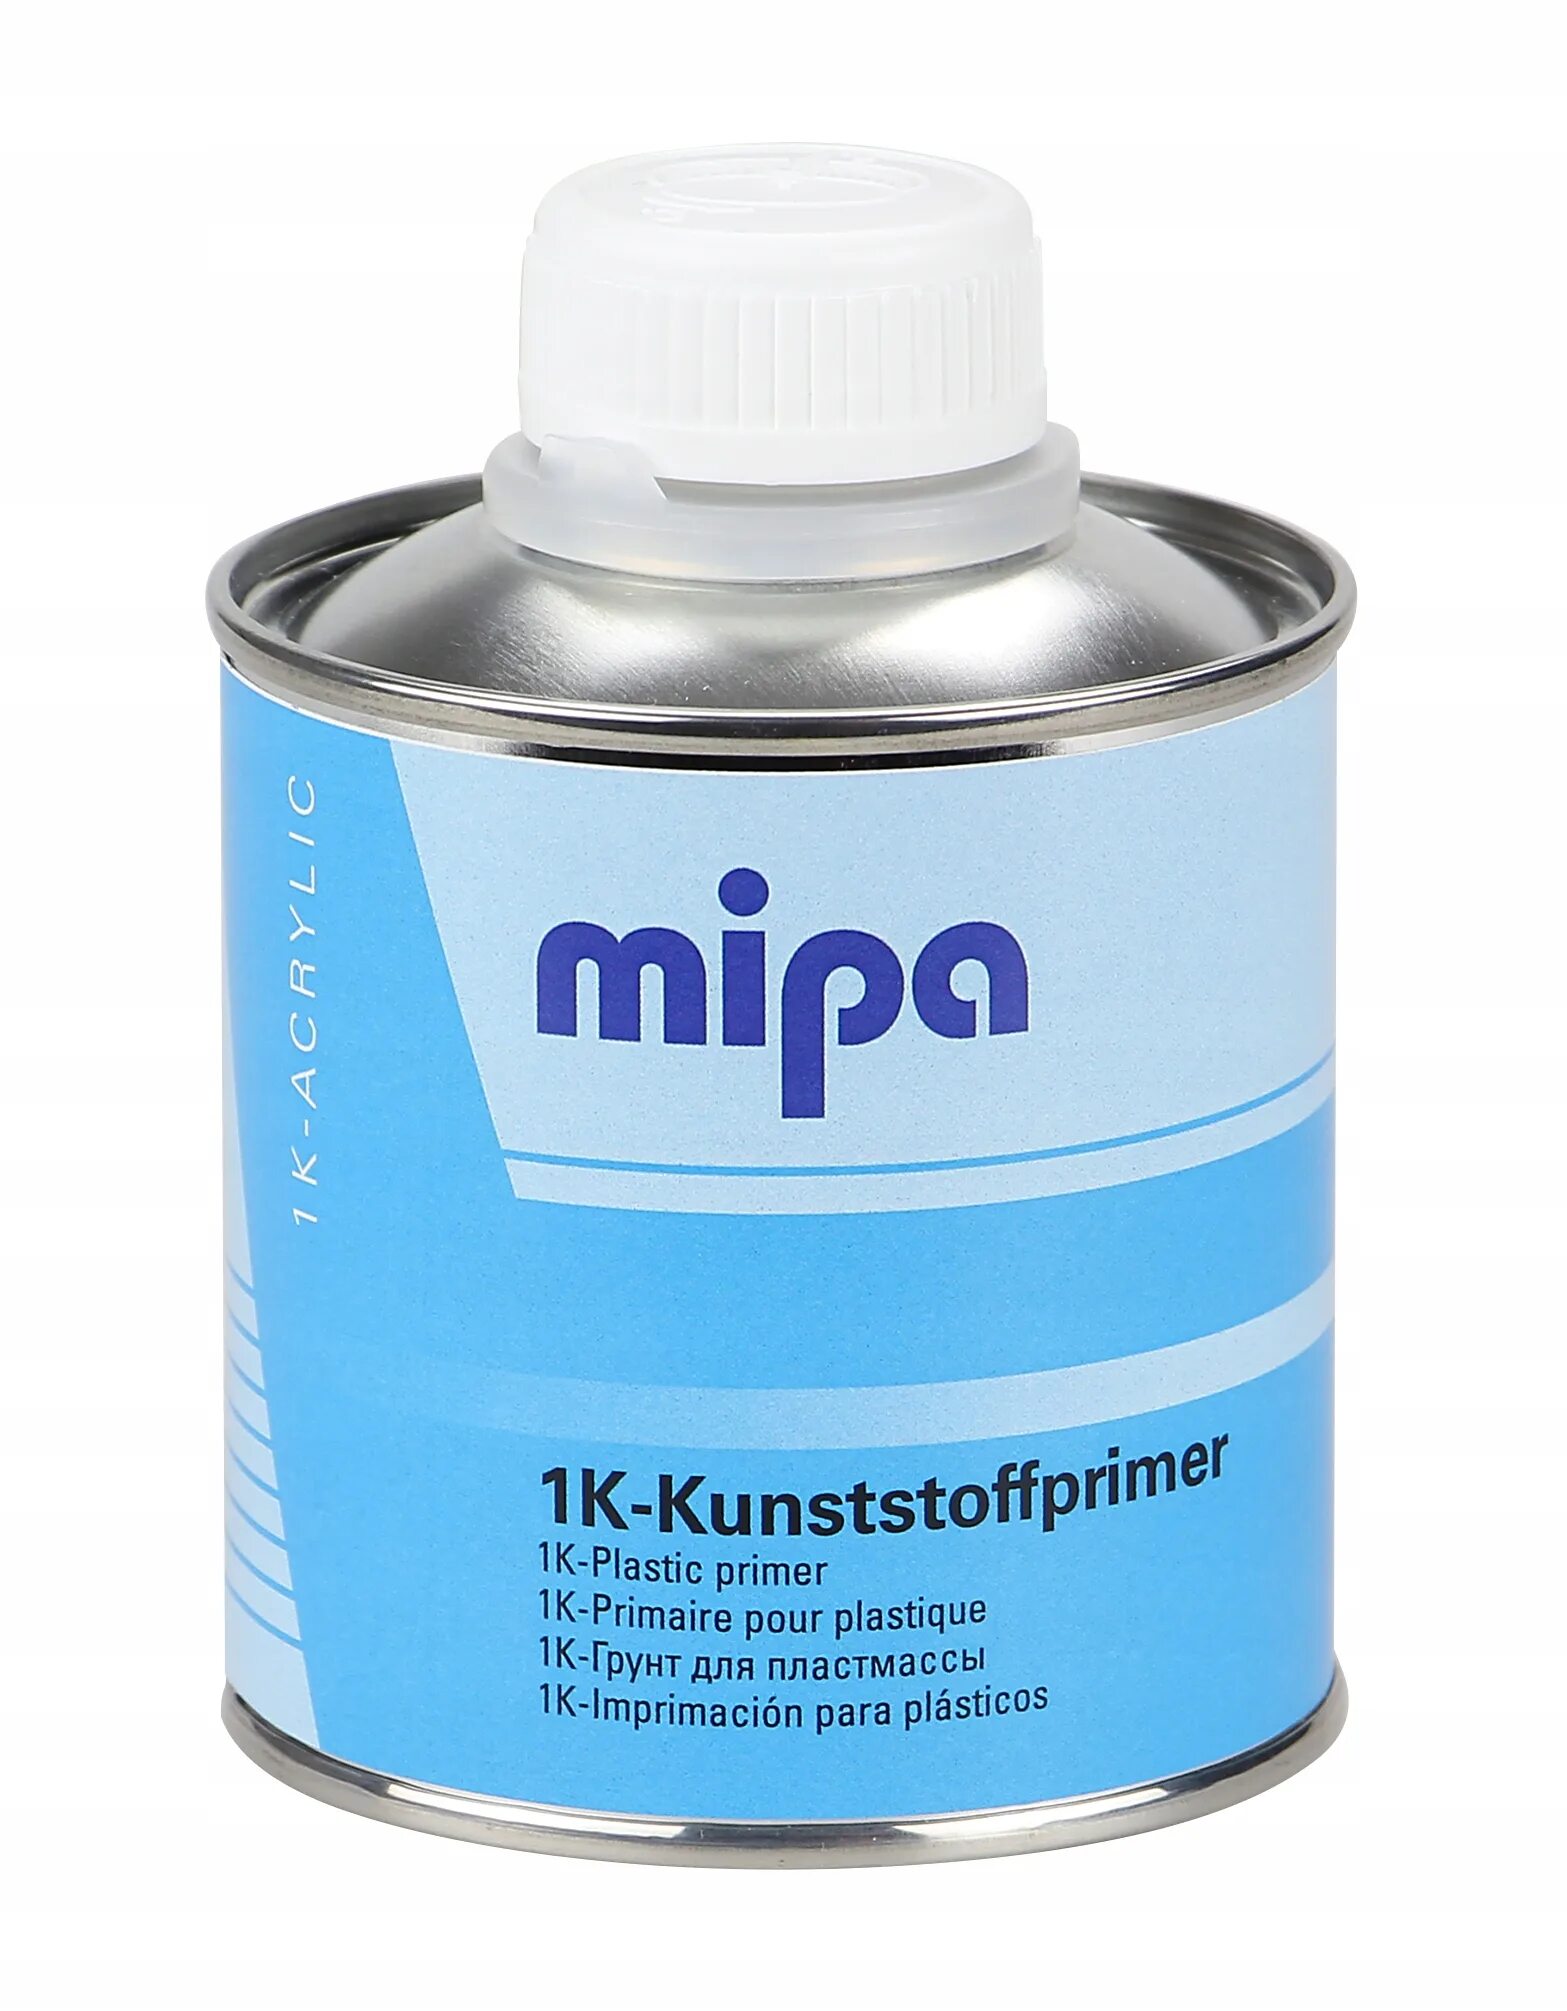 MIPA 1k-Kunststoffprimer адгезионный грунт по пластику (0,25л). MIPA пластик праймер. Plastic primer грунт для пластика. MIPA 2k-Plastic артикул.